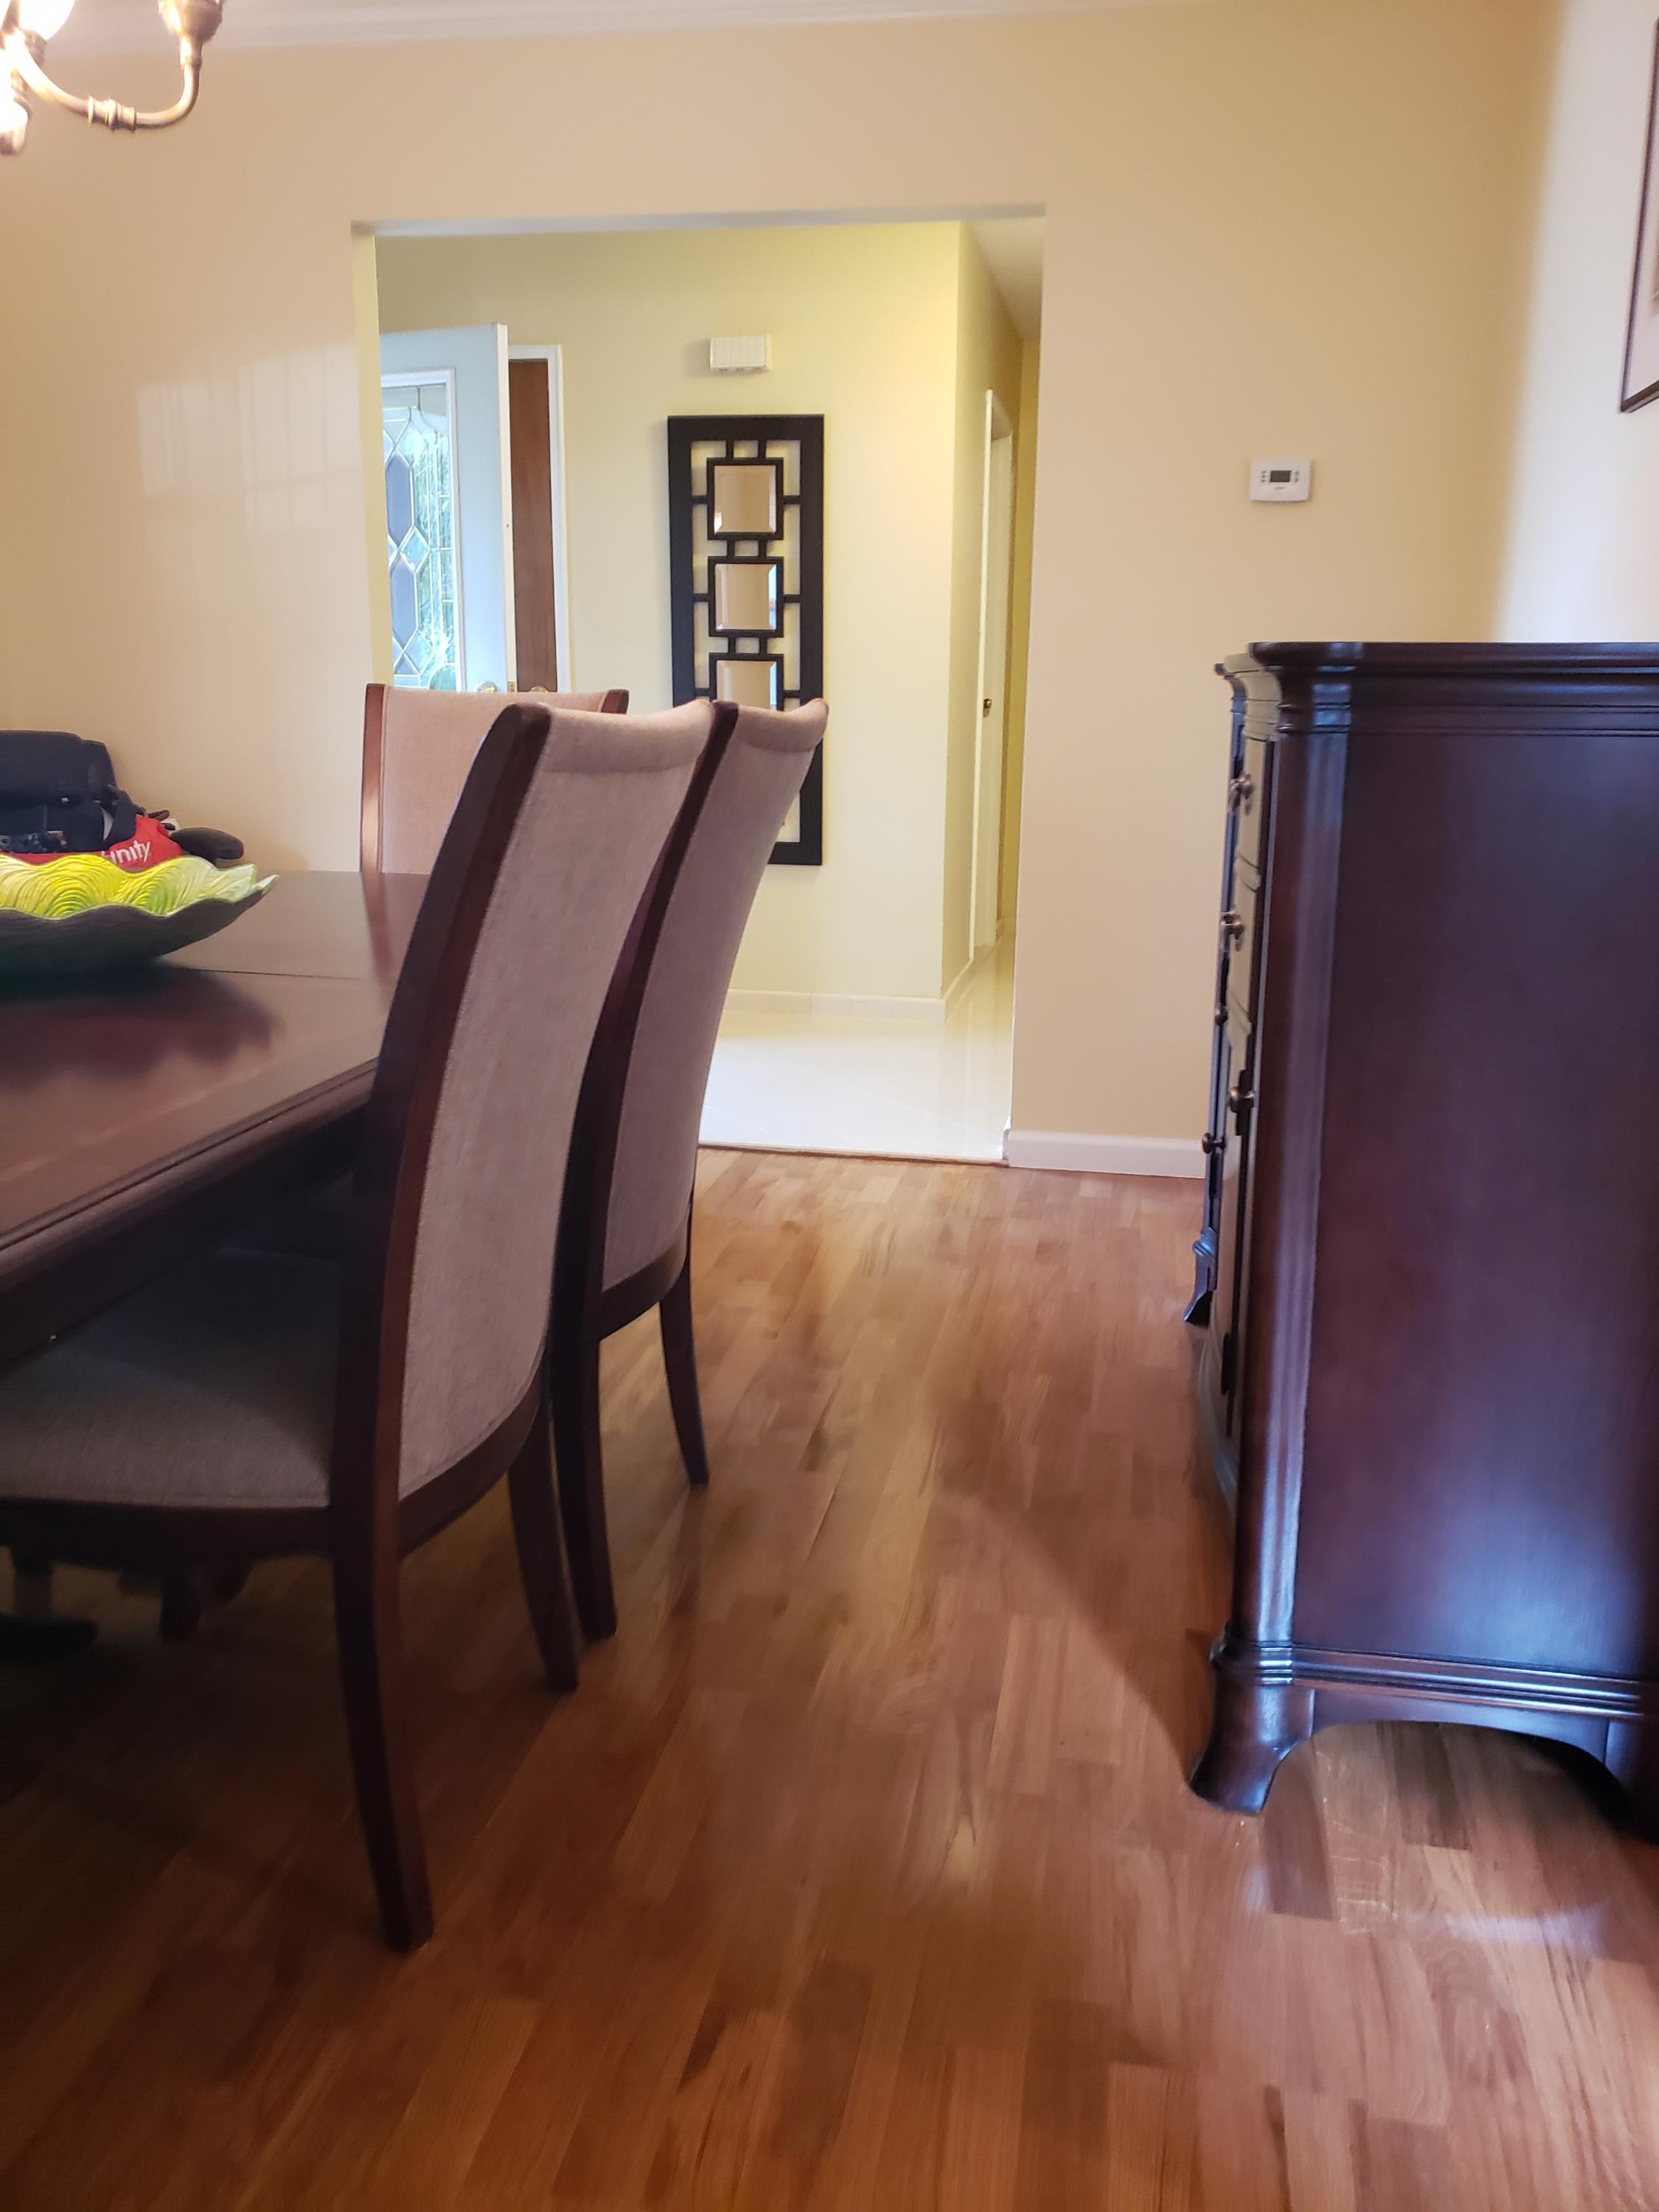 Interior home renovation with hardwood flooring